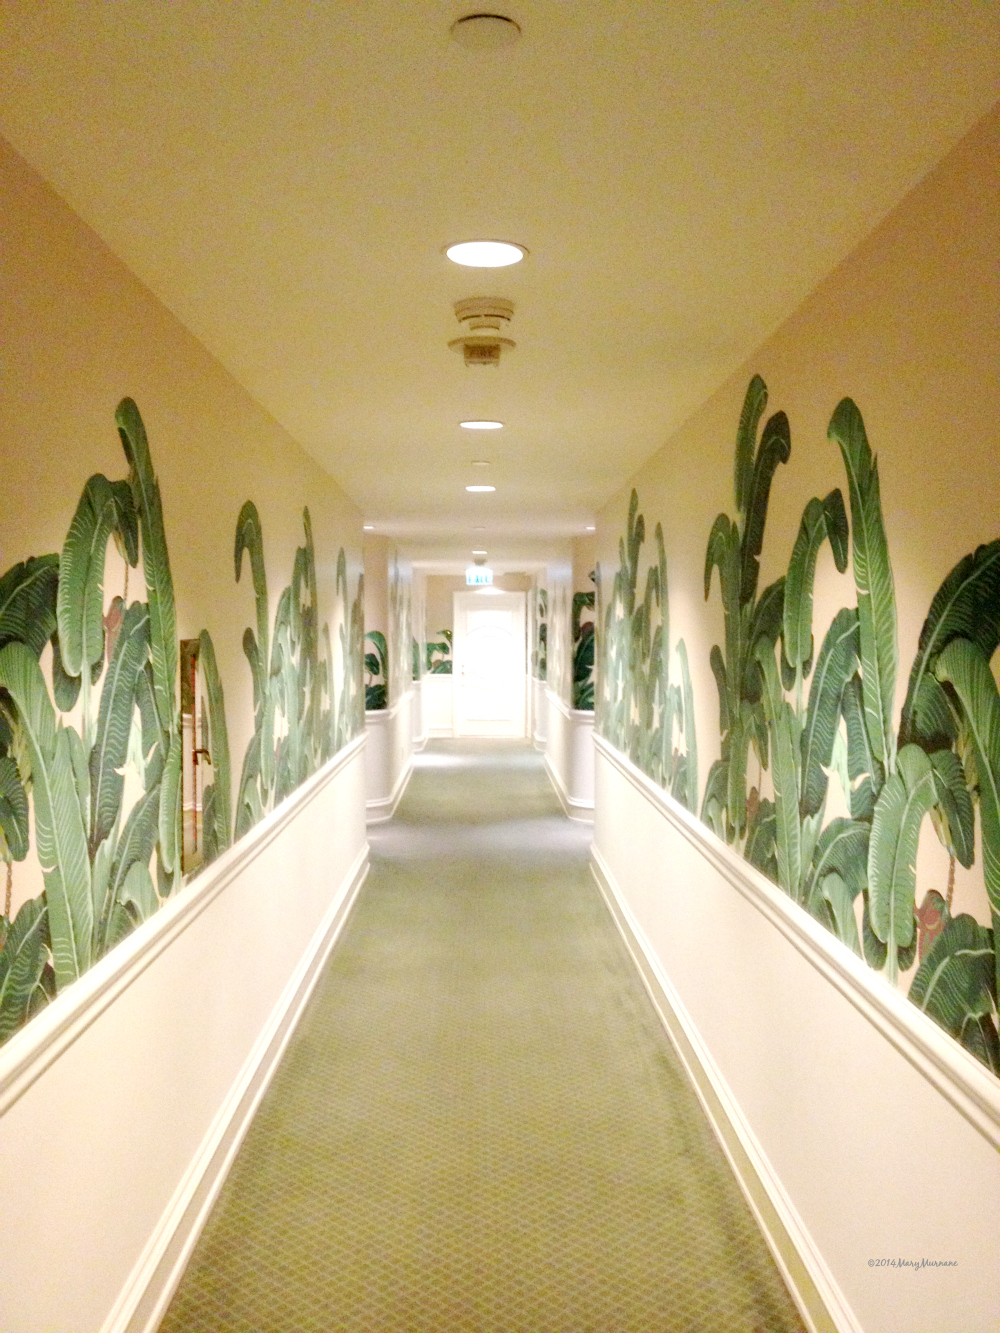 beverly hills hotel wallpaper,ceiling,aisle,building,interior design,room